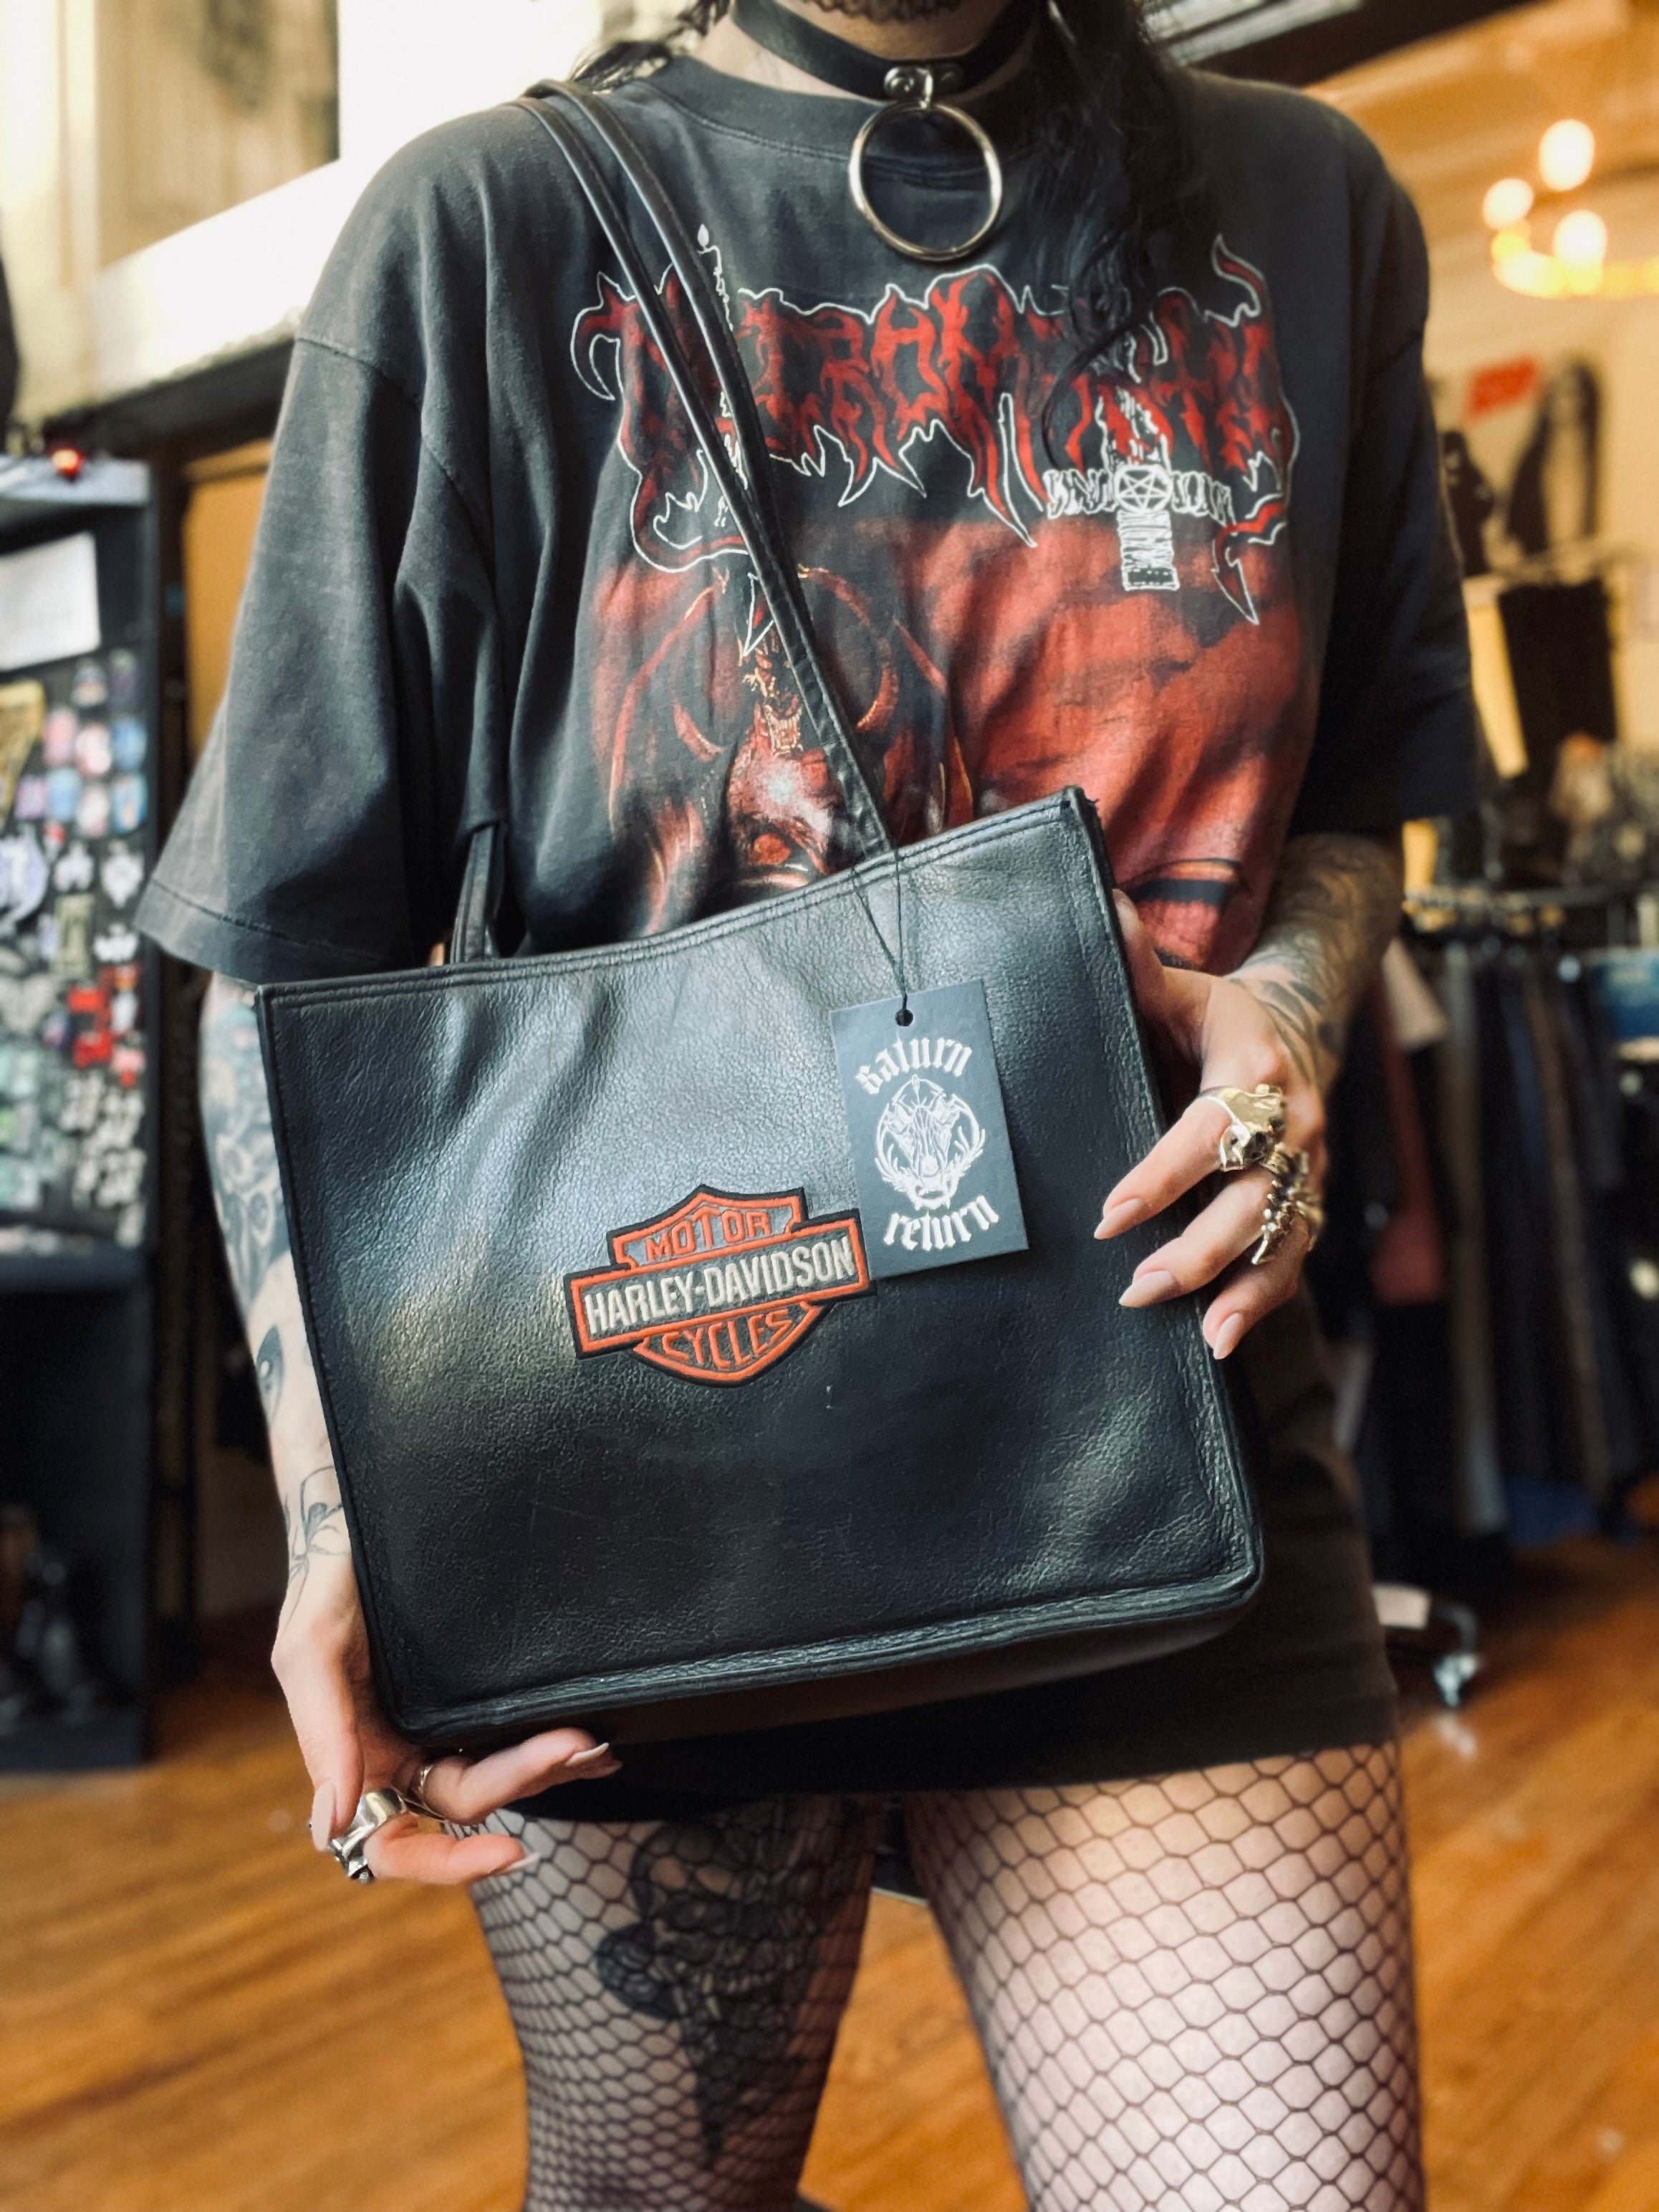 Harley-Davidson Orange Bags & Handbags for Women